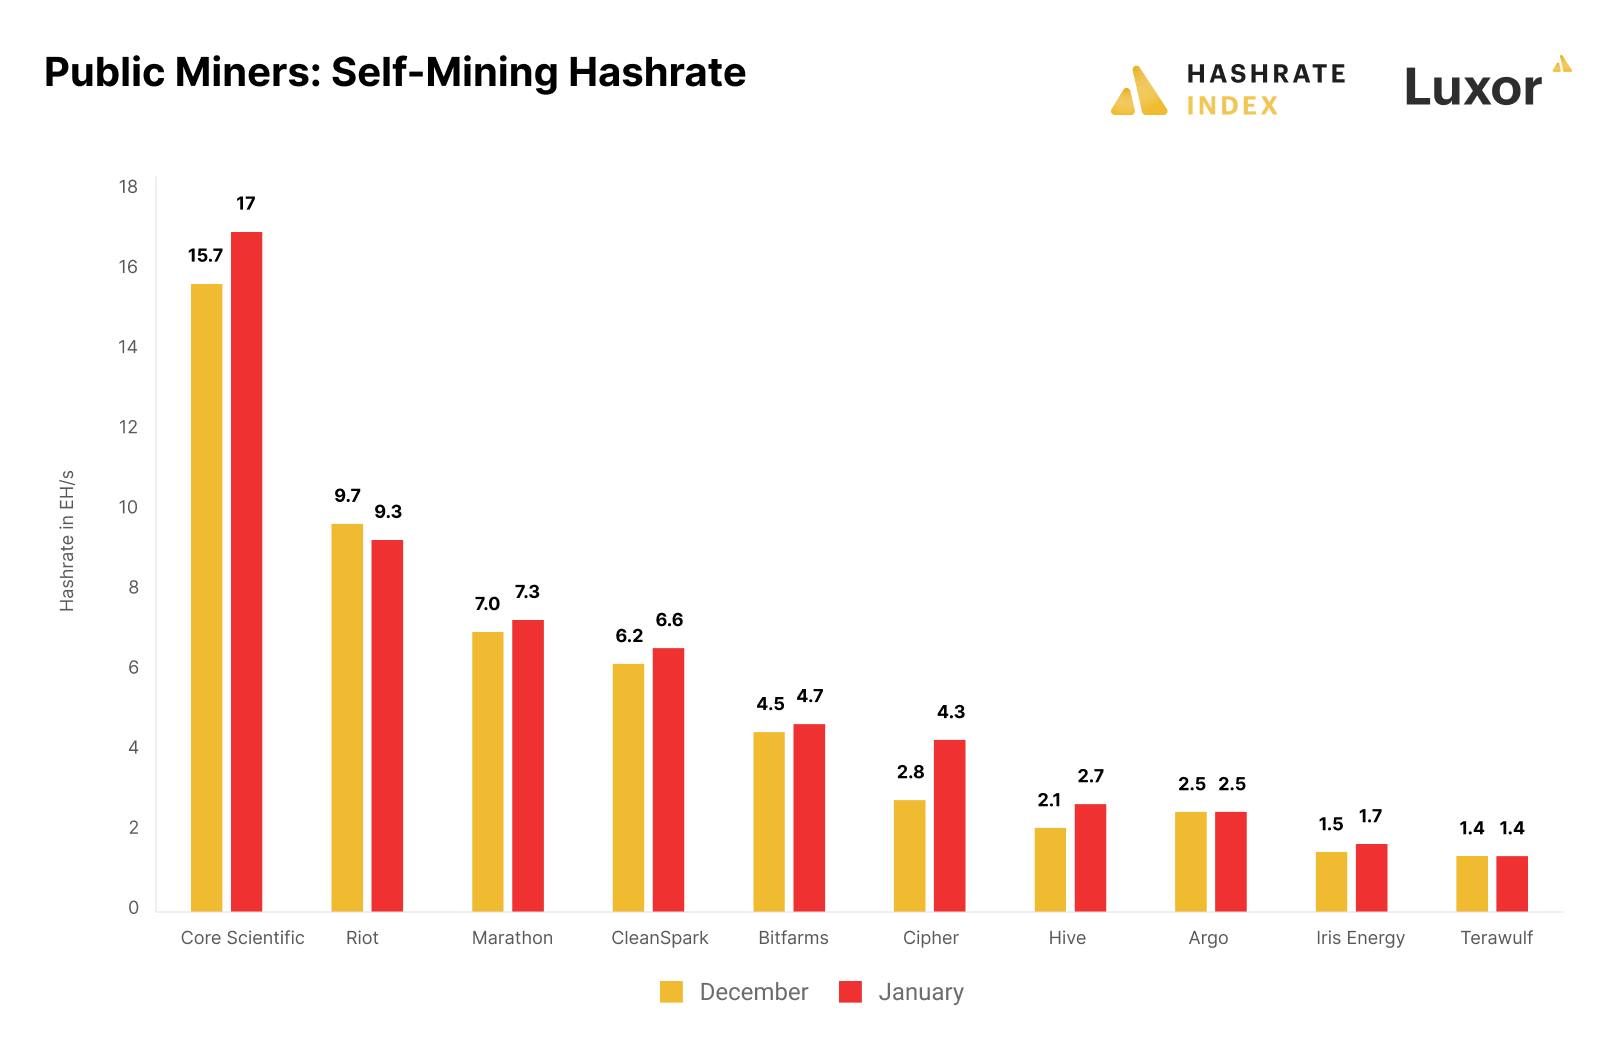 Source: Hashrate Index - Public miners' production updates